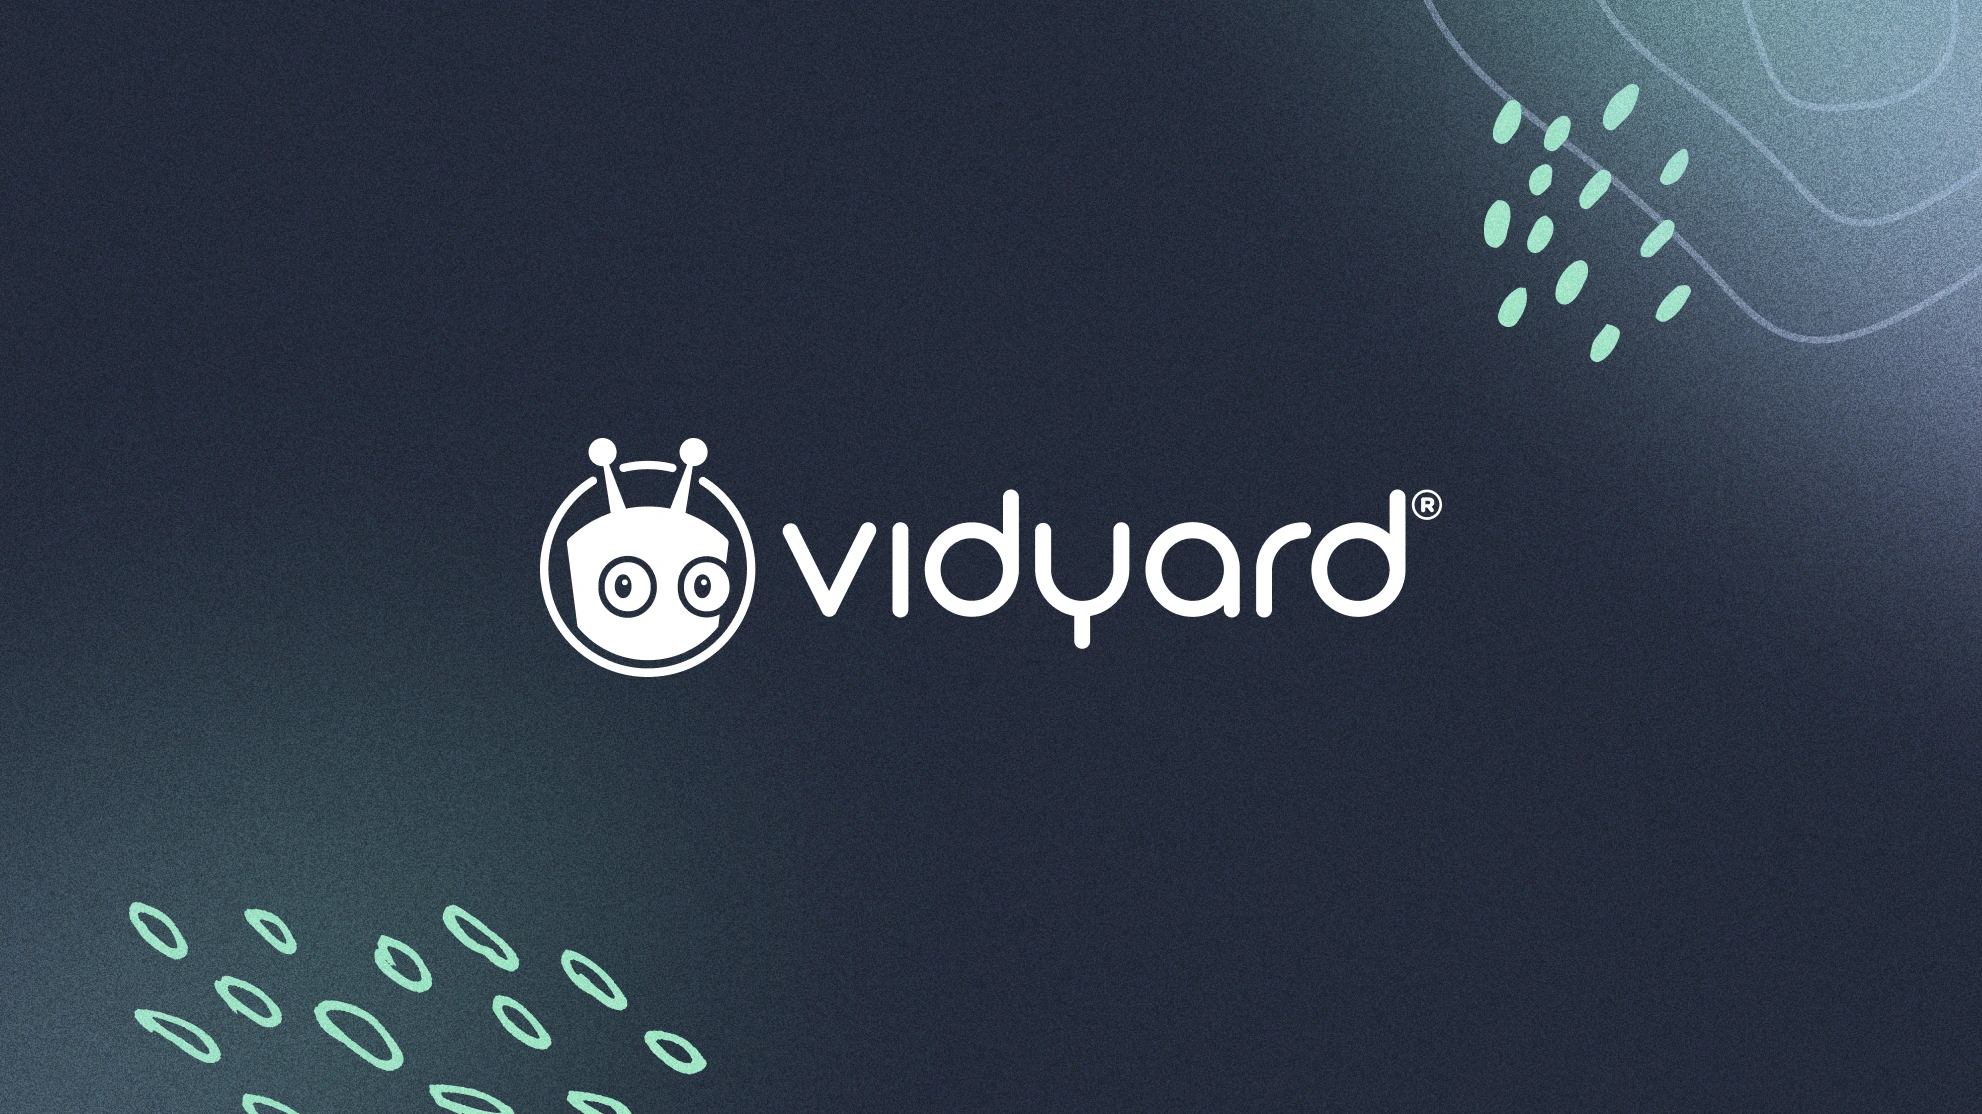 Vidyard to offer non-profits access to video marketing platform